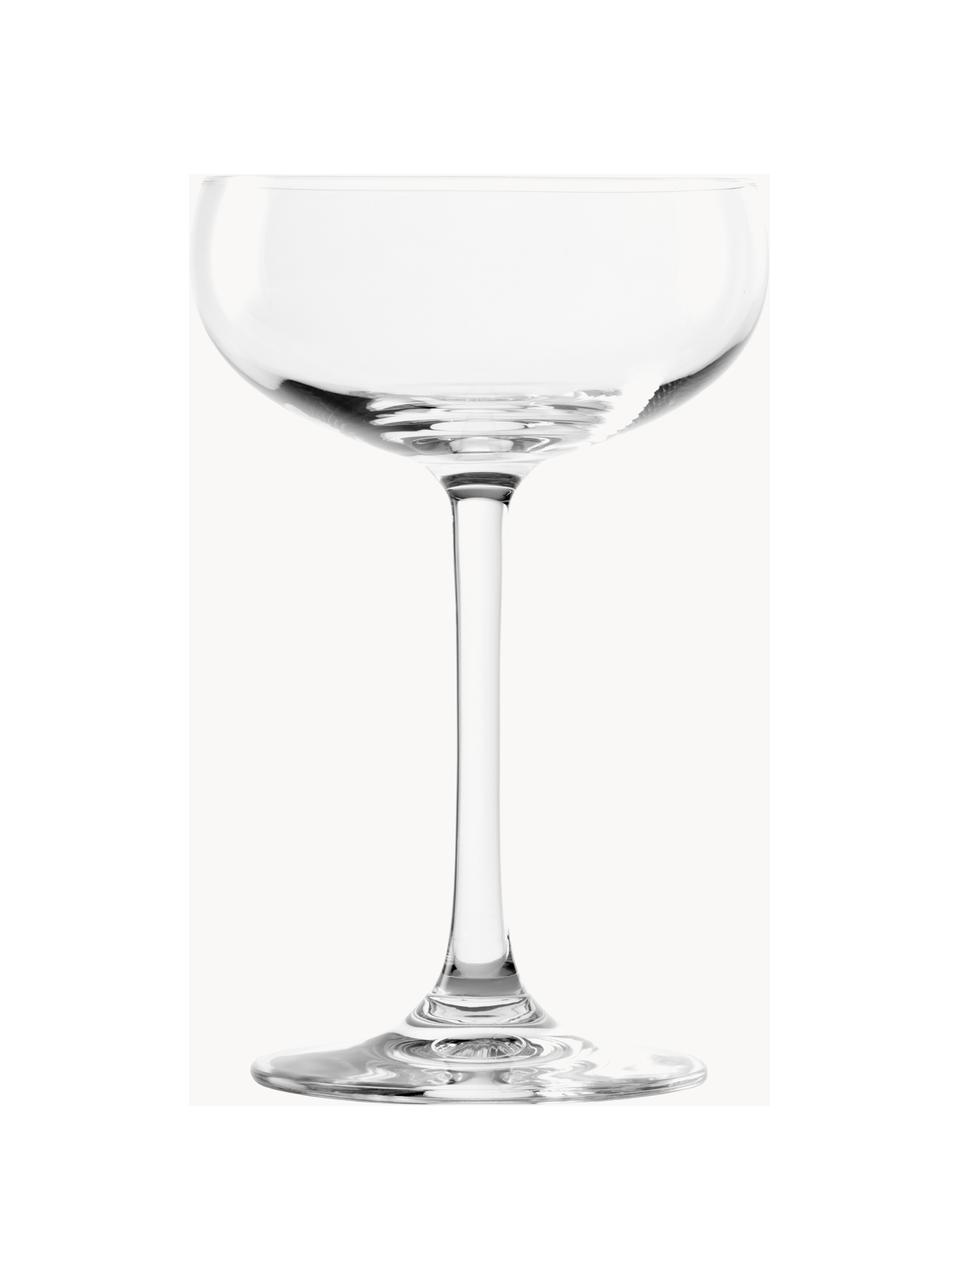 Kieliszek do szampana ze szkła kryształowego Elements, 6 szt., Szkło kryształowe, Transparentny, Ø 10 x W 15 cm, 230 ml